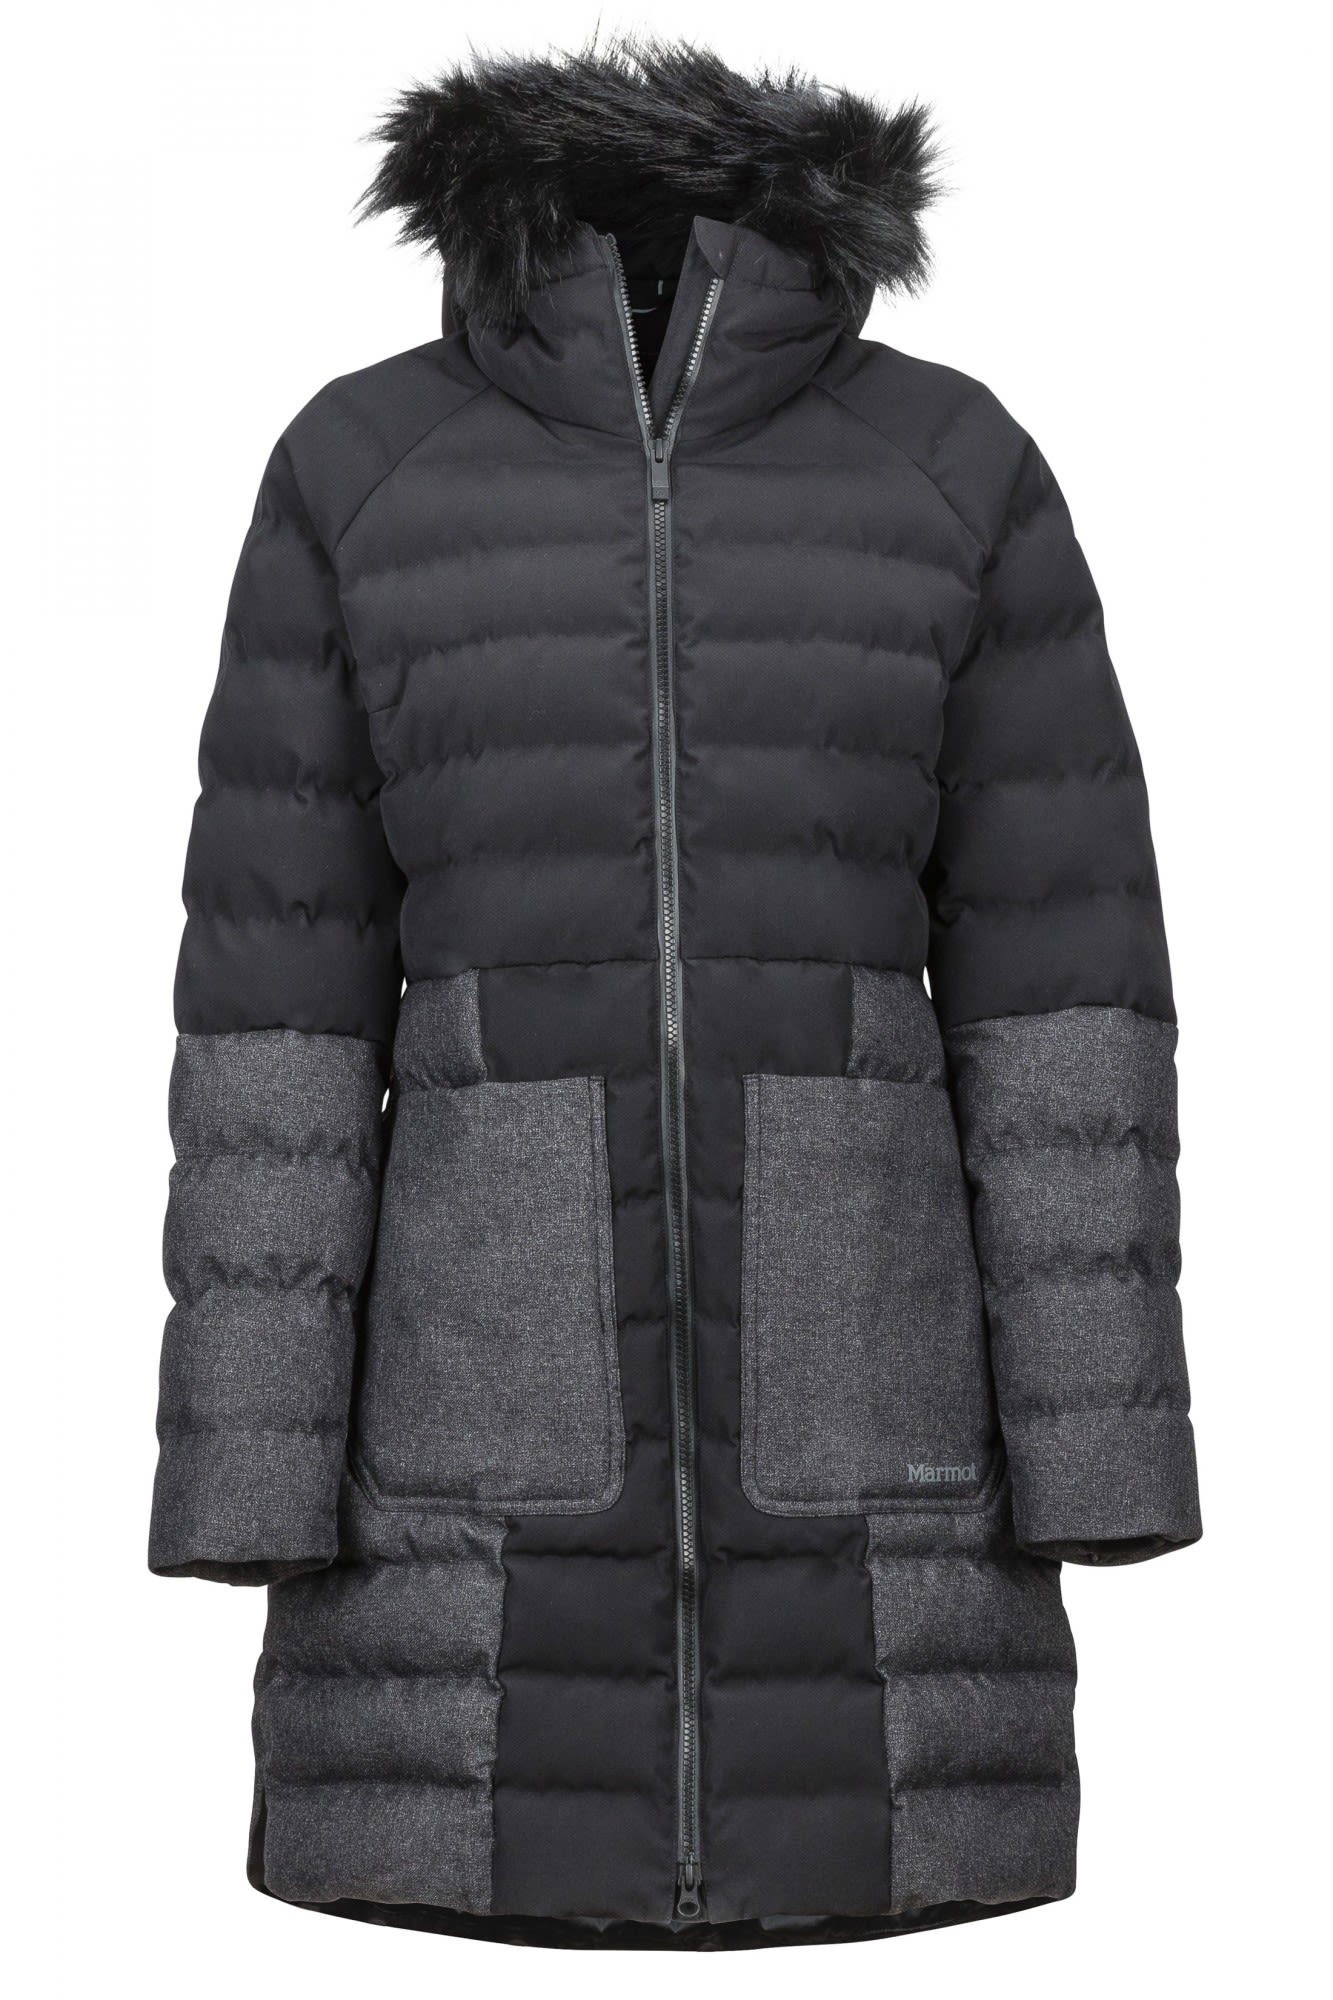 Marmot Margaret Featherless Jacket Schwarz- Female Thinsulate- Anoraks- Grsse S - Farbe Black